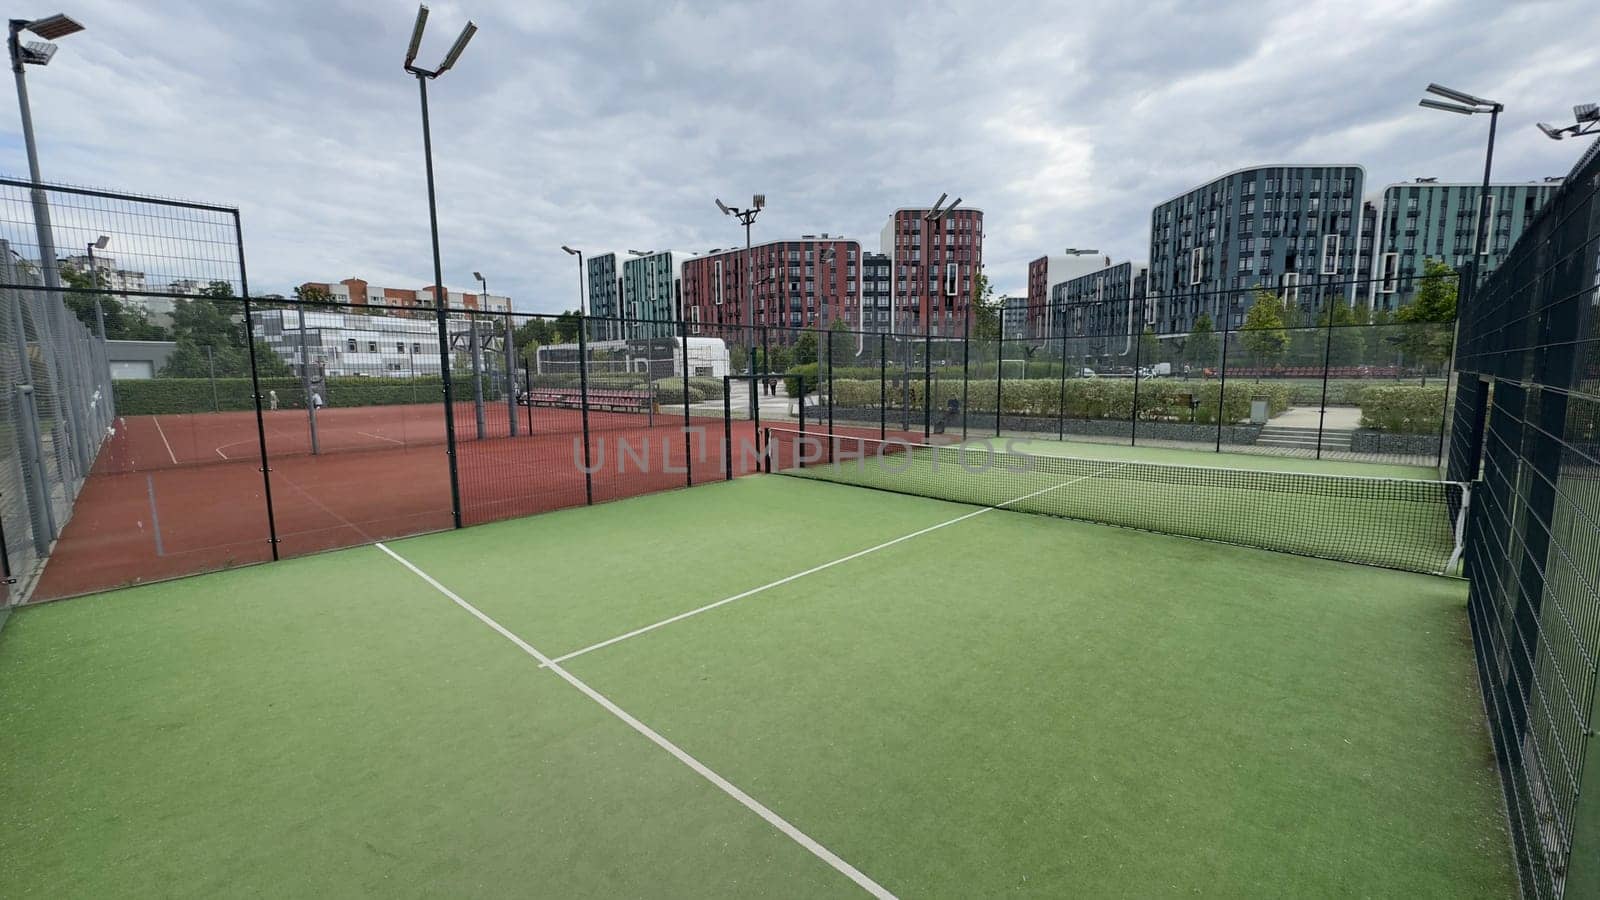 tennis padel court grass turf by Andelov13